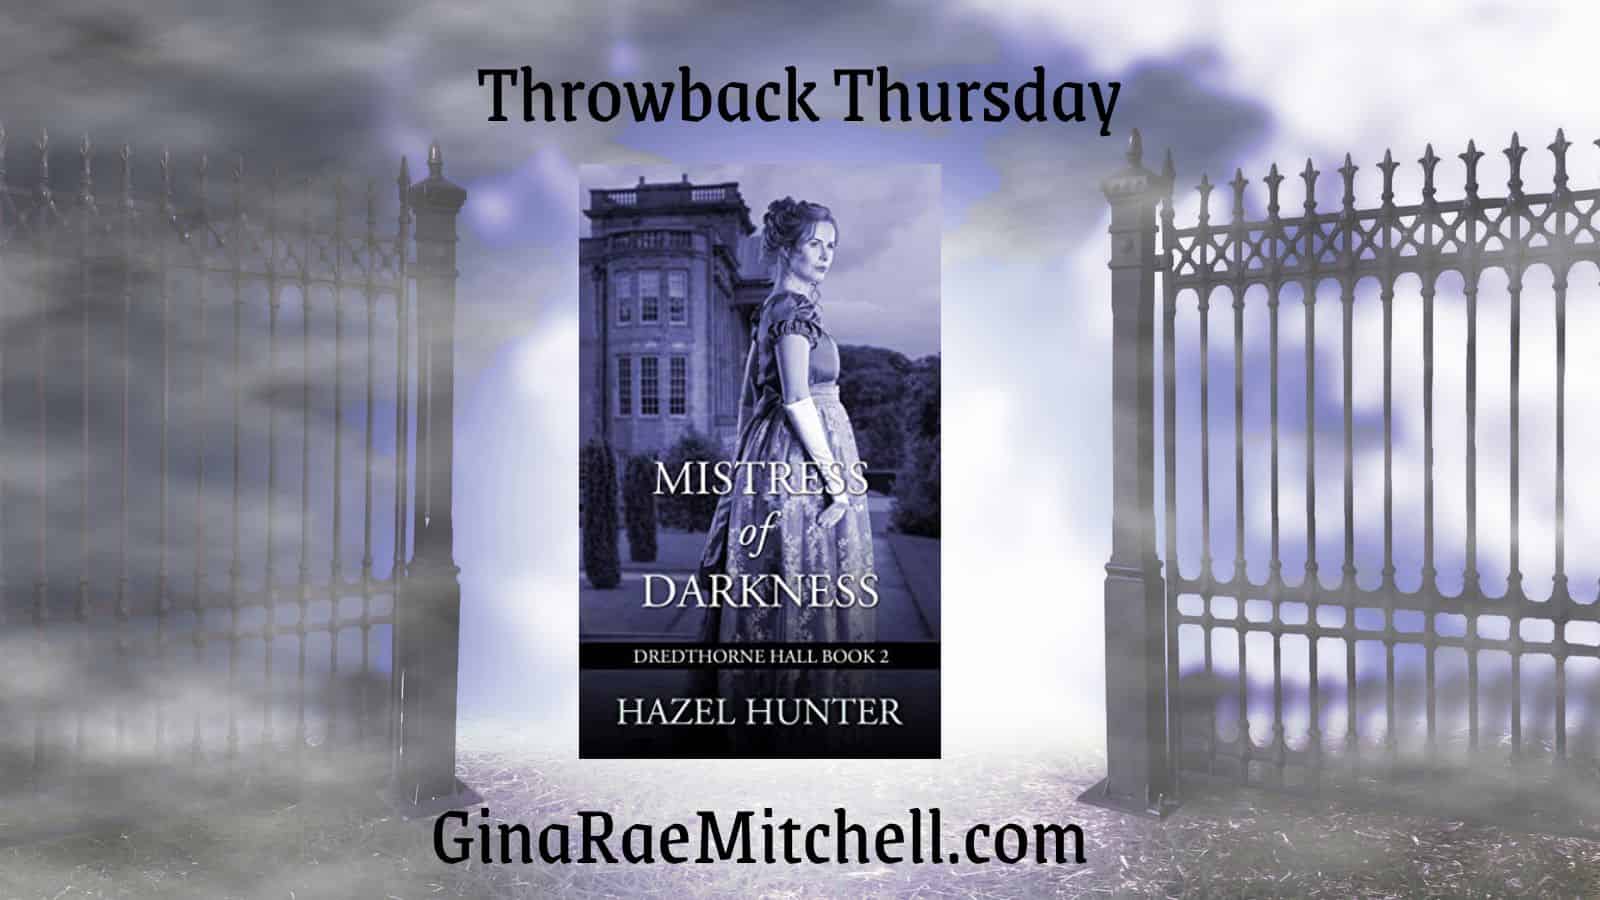 Throwback Thursday #2 - Mistress of Darkness by Hazel Hunter - Delightful #SpookyRead #DredthorneHall #GothicRomance